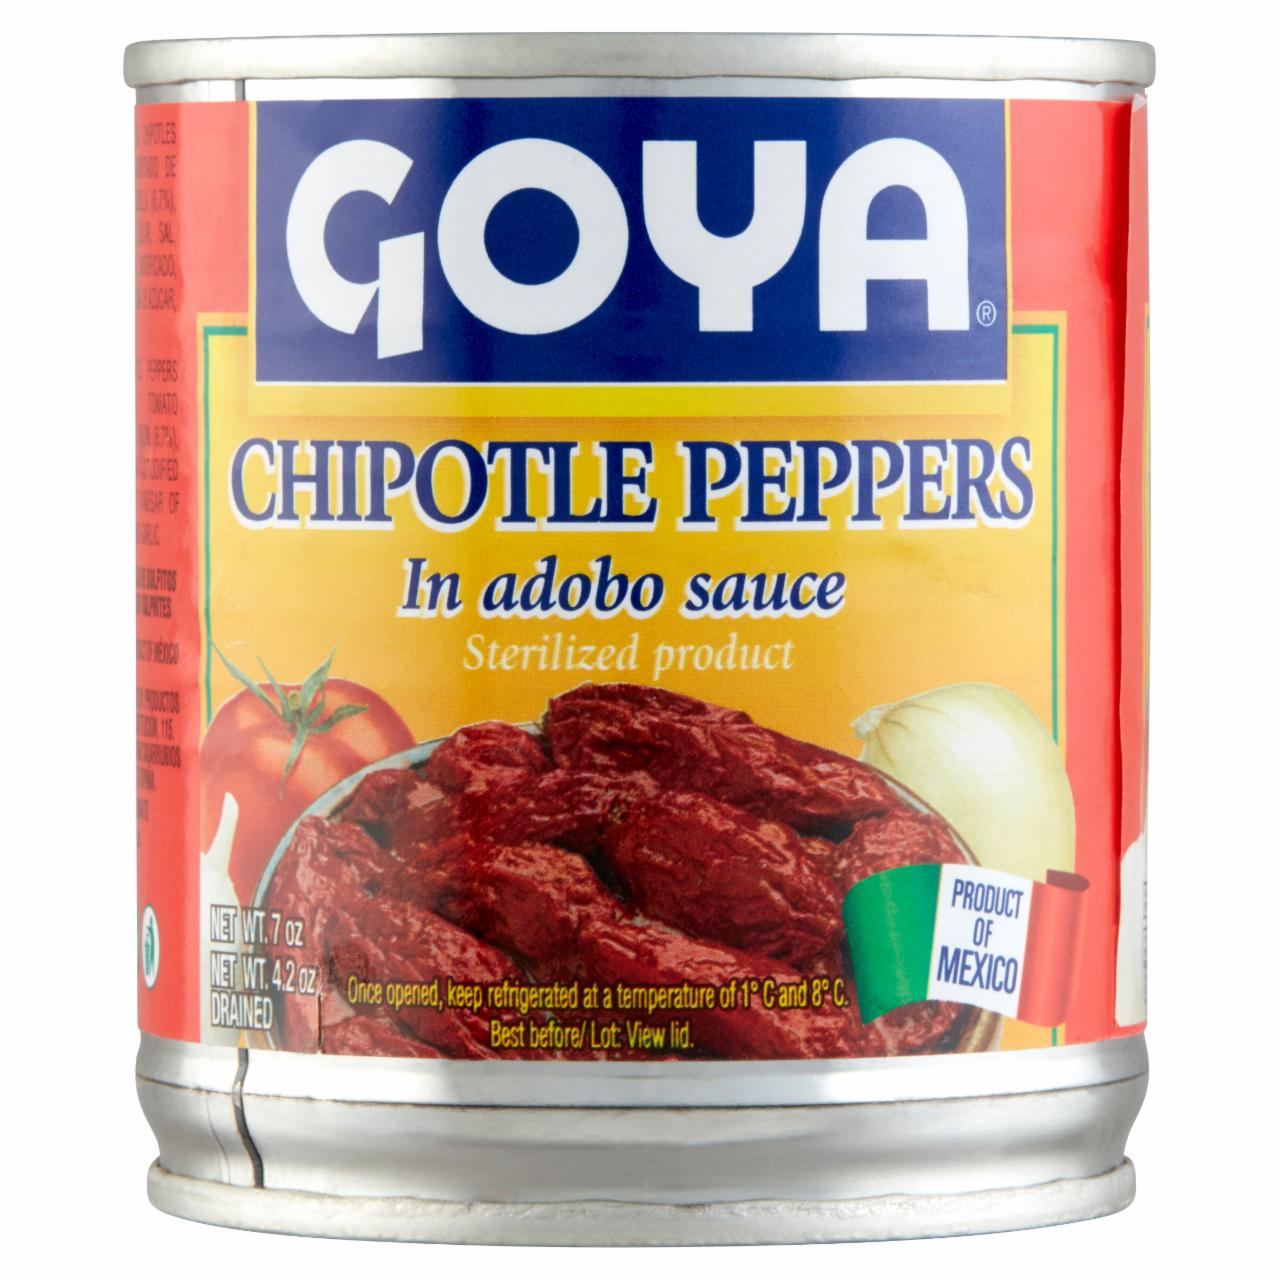 Képek - Goya Chipotle chili paprika, páclében 198 g